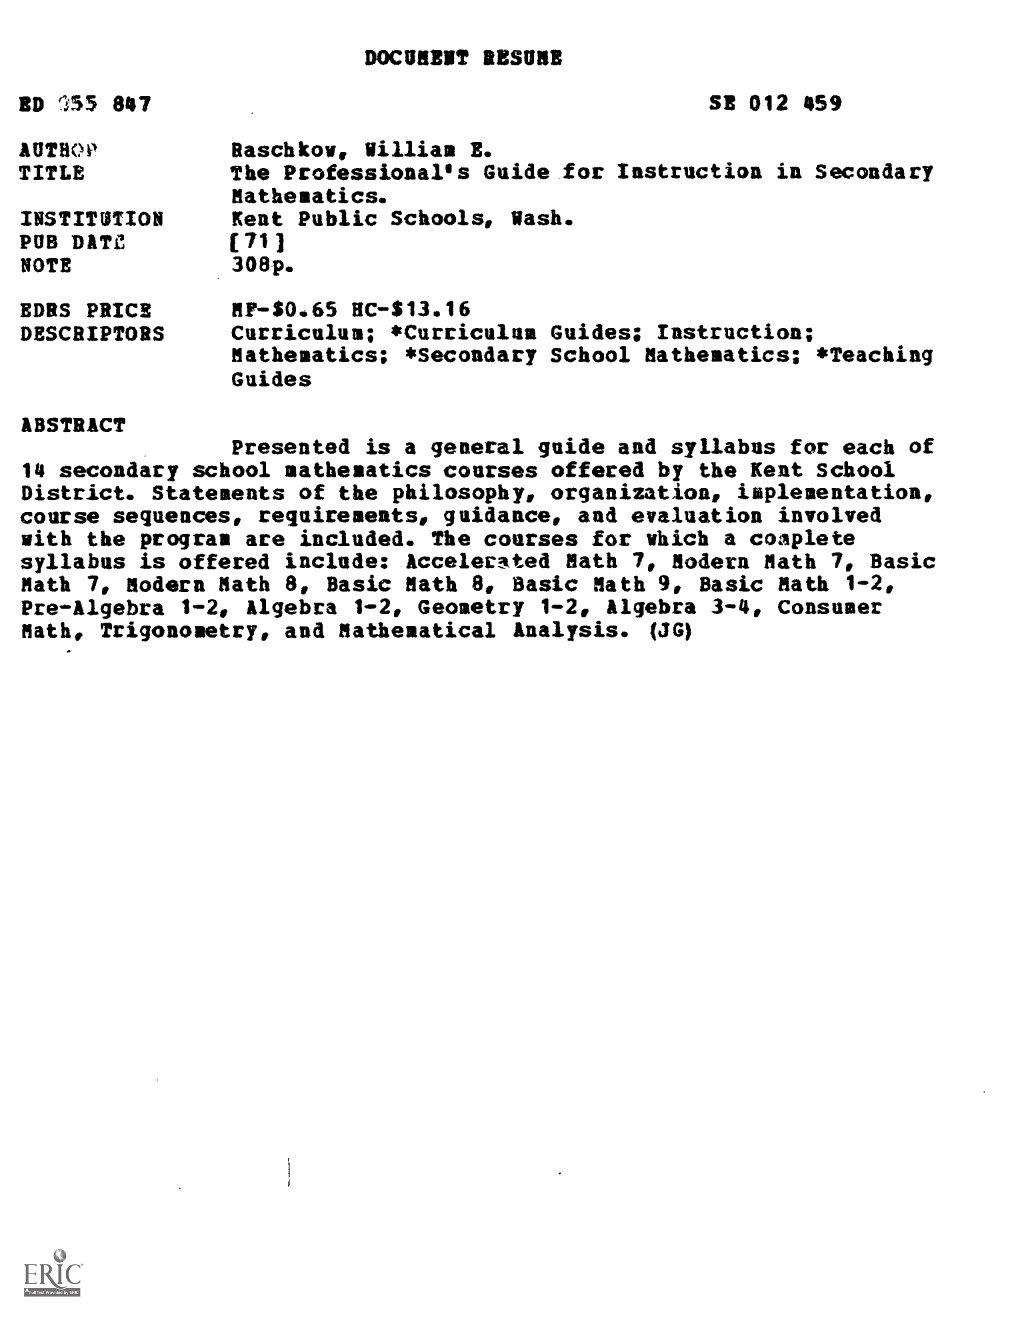 Document Resume Ed 155 847 Se 012 459 Autrop